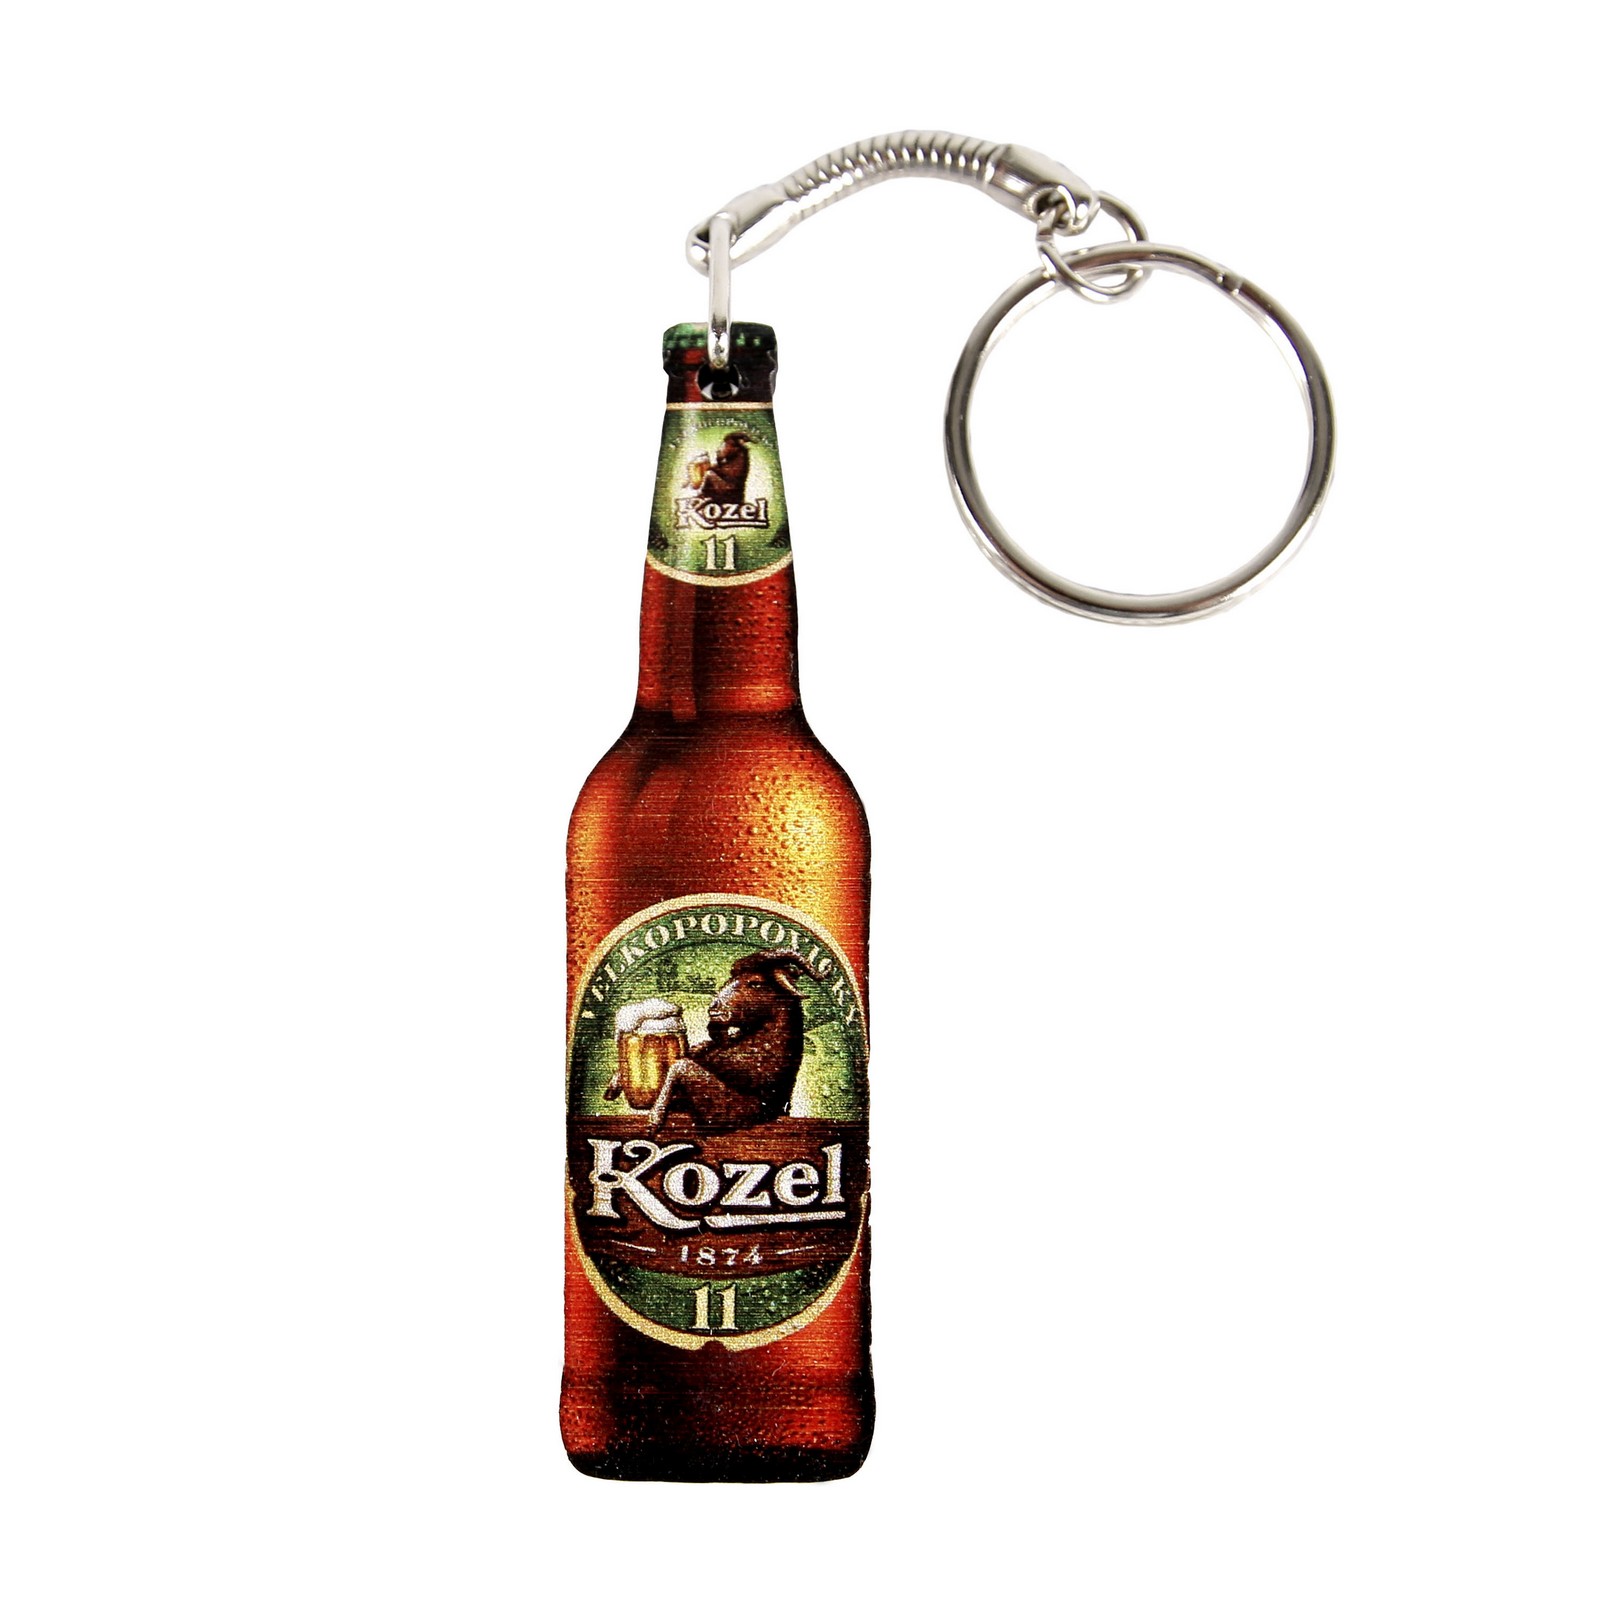 “Kozel 11°” wooden key case